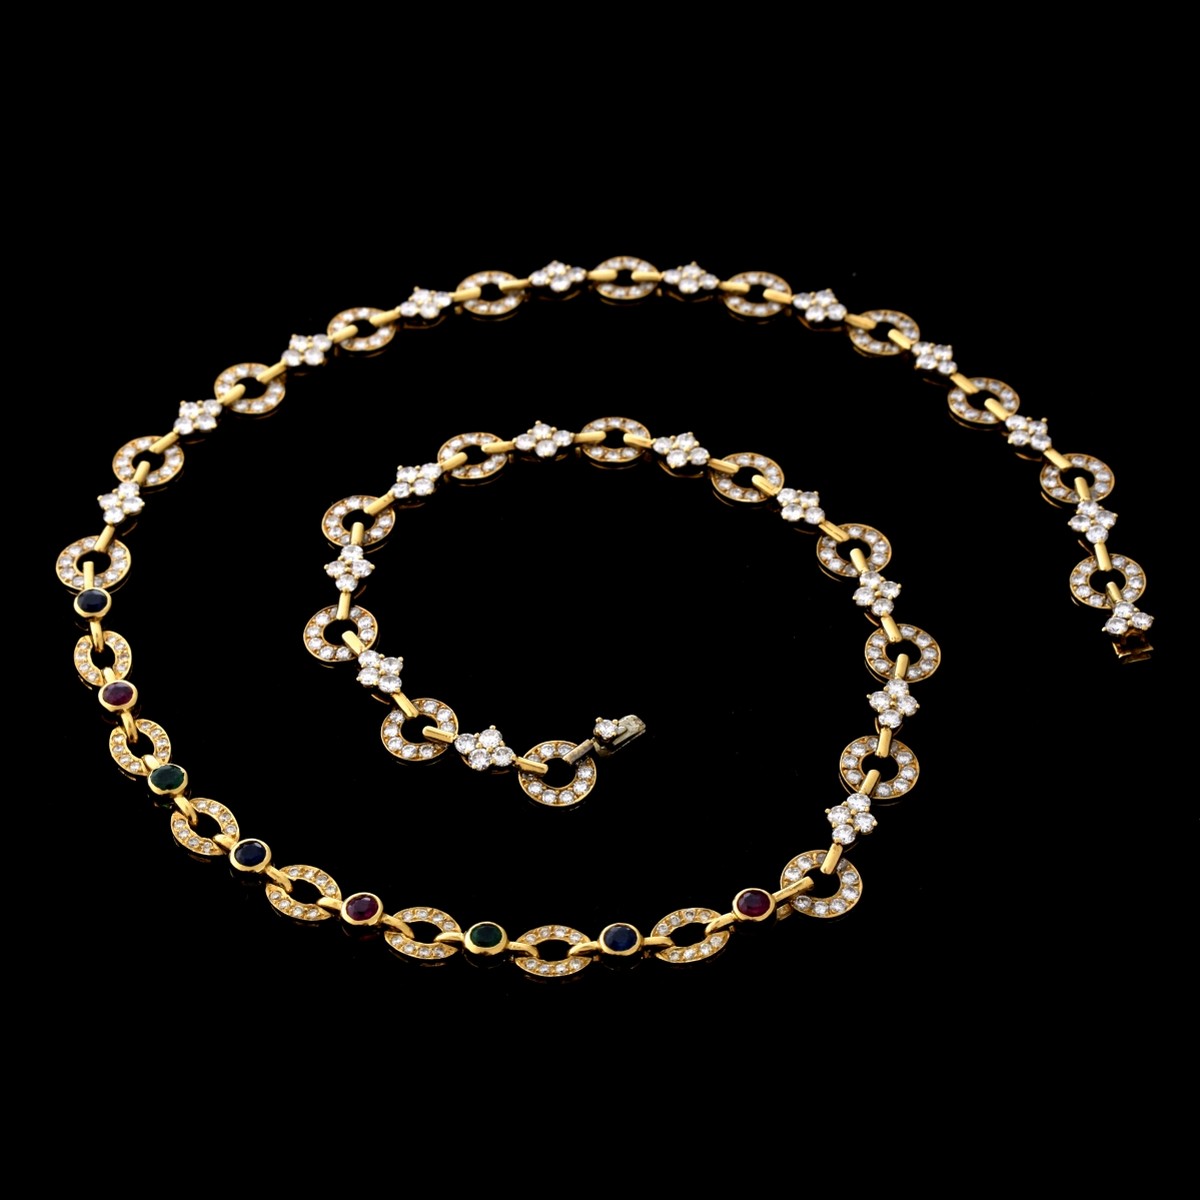 Stunning Black Opal, Diamond and 18K Necklace